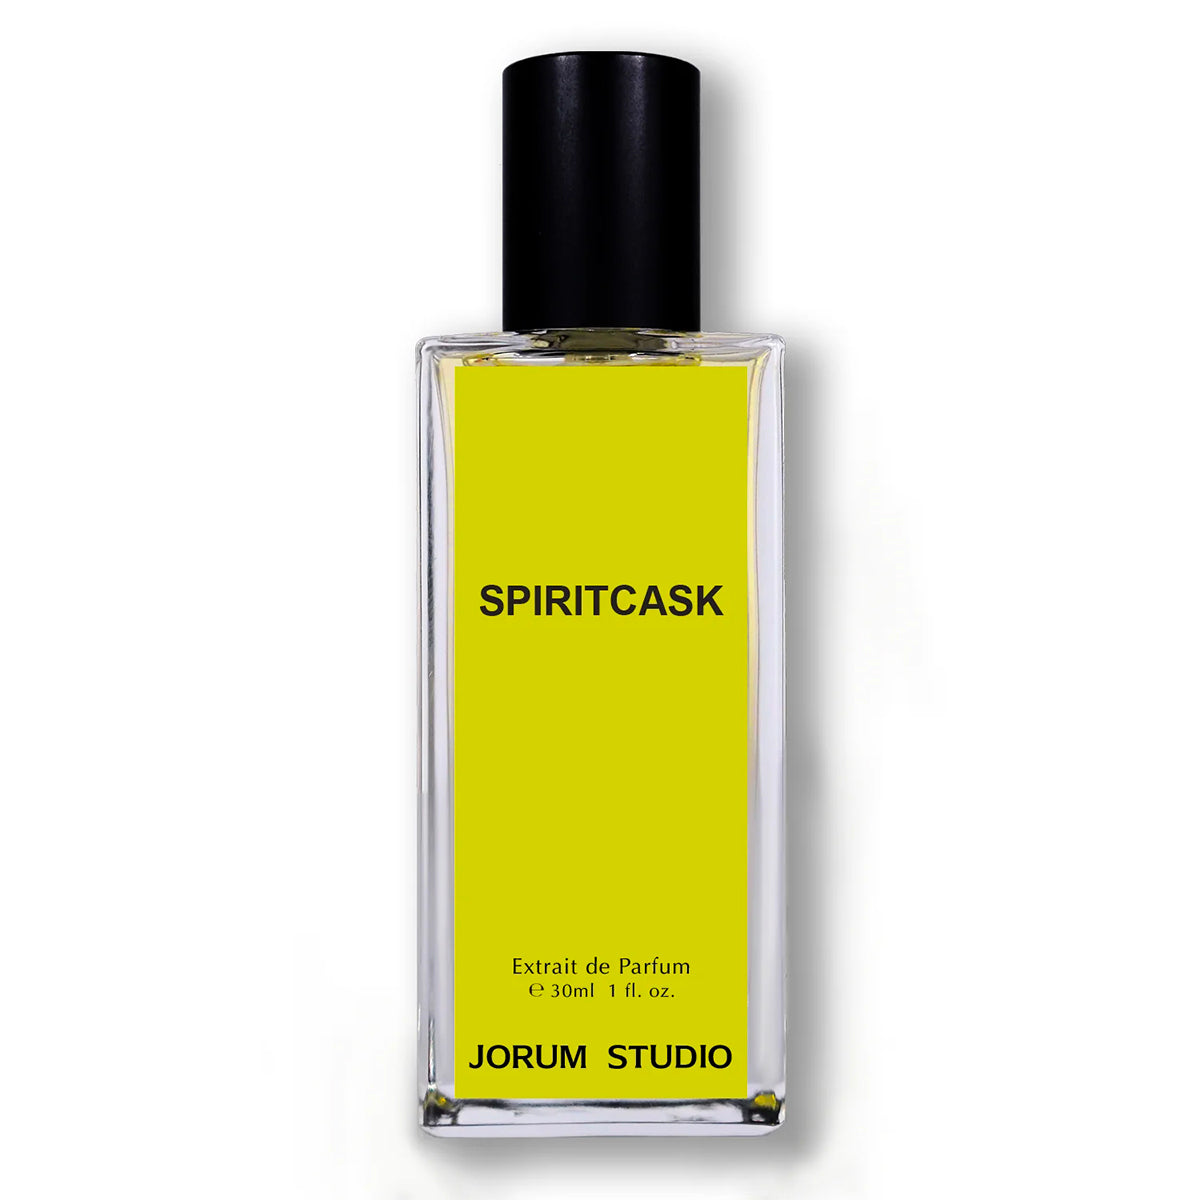 SPIRITCASK by Jorum Studio at Indigo Perfumery